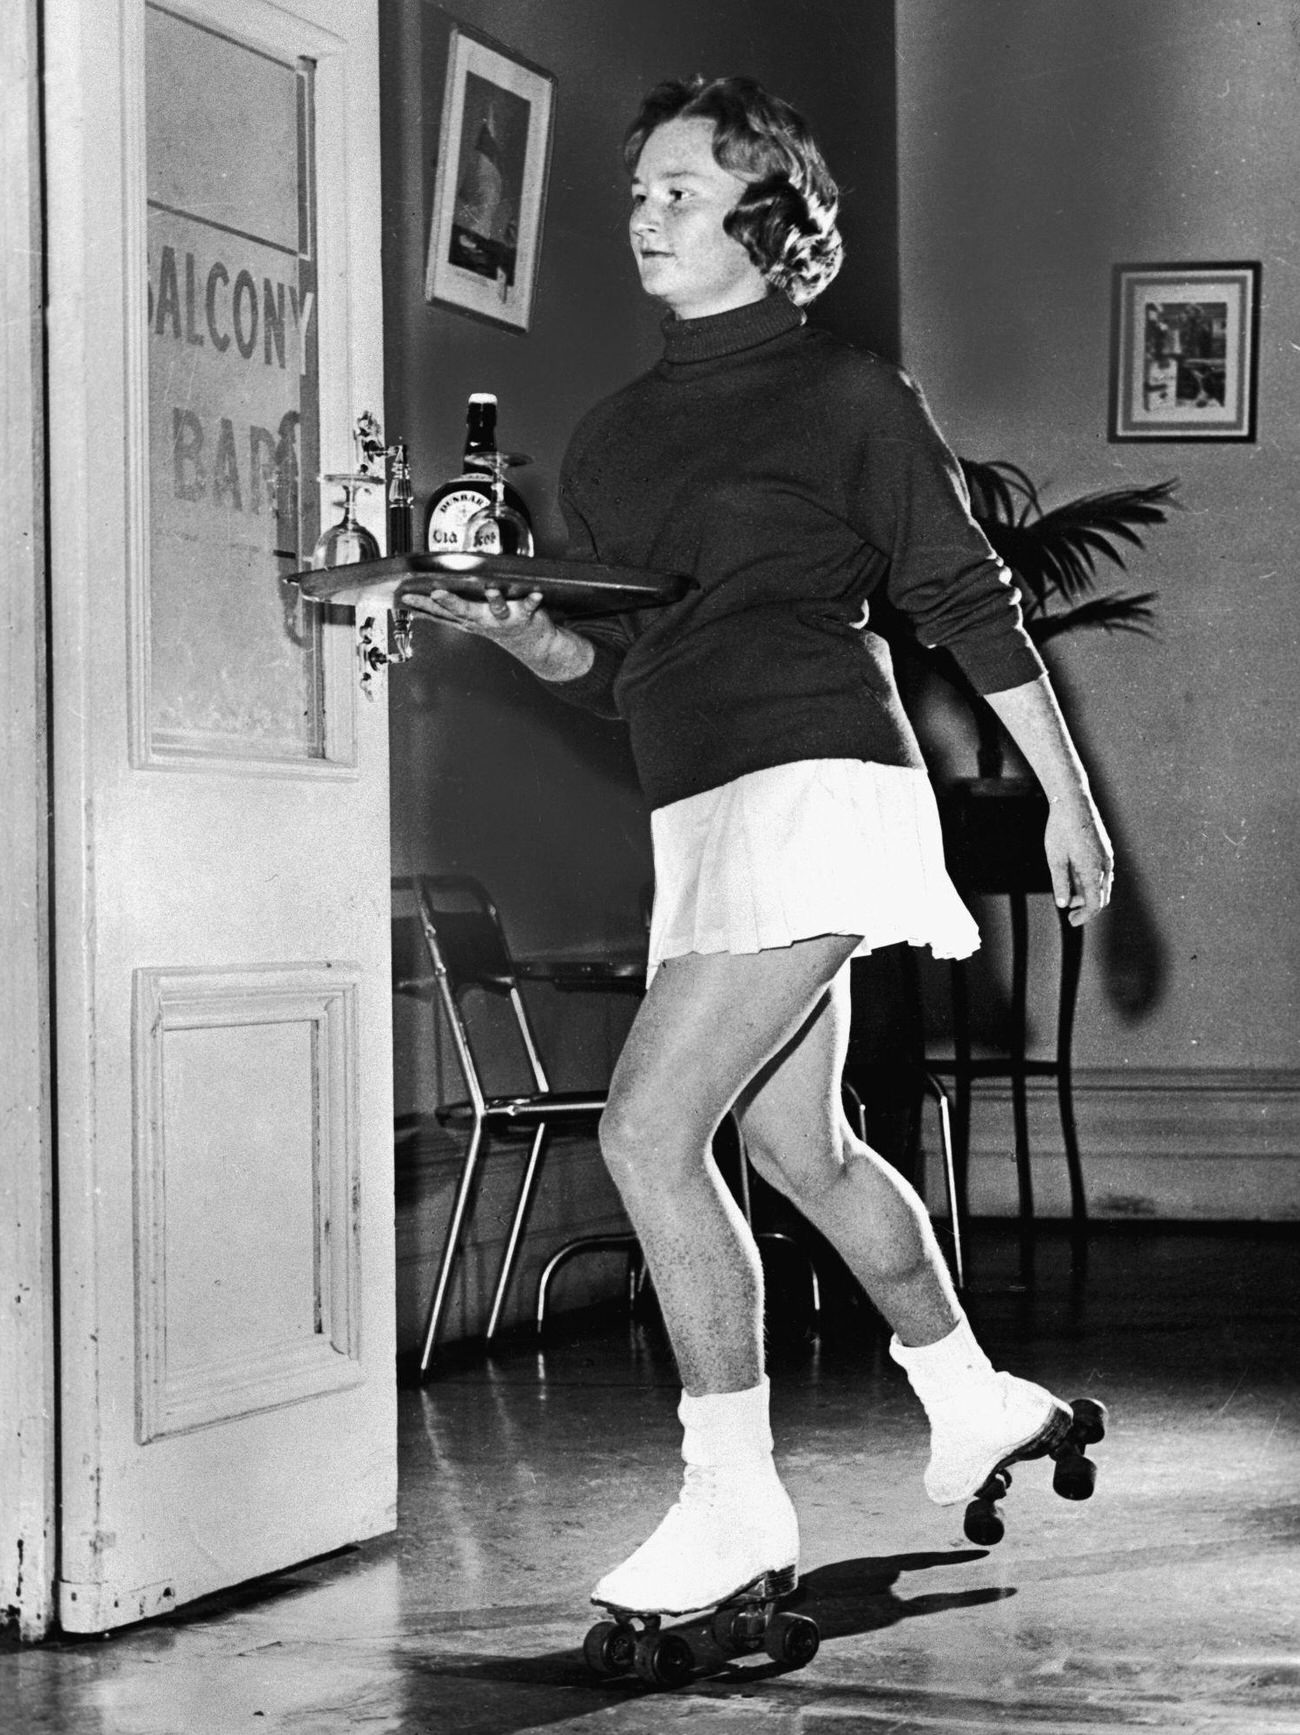 Waitress on Roller Skates Serves Drinks at His Majesty's Hotel, Perth, Australia, 1963